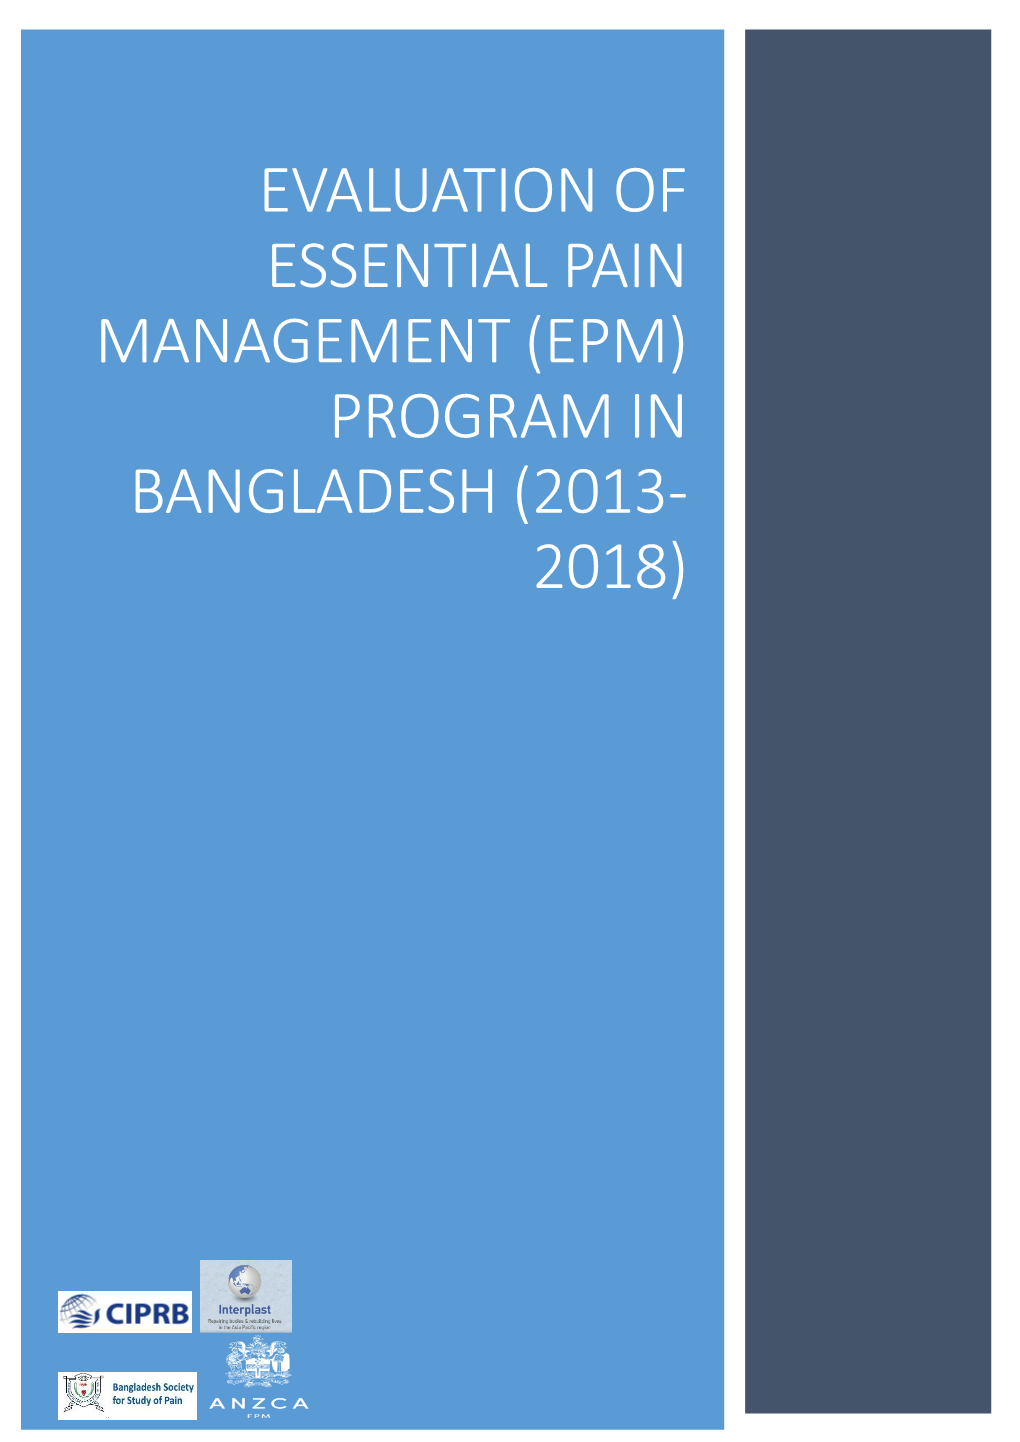 Epm) Program in Bangladesh (2013- 2018)